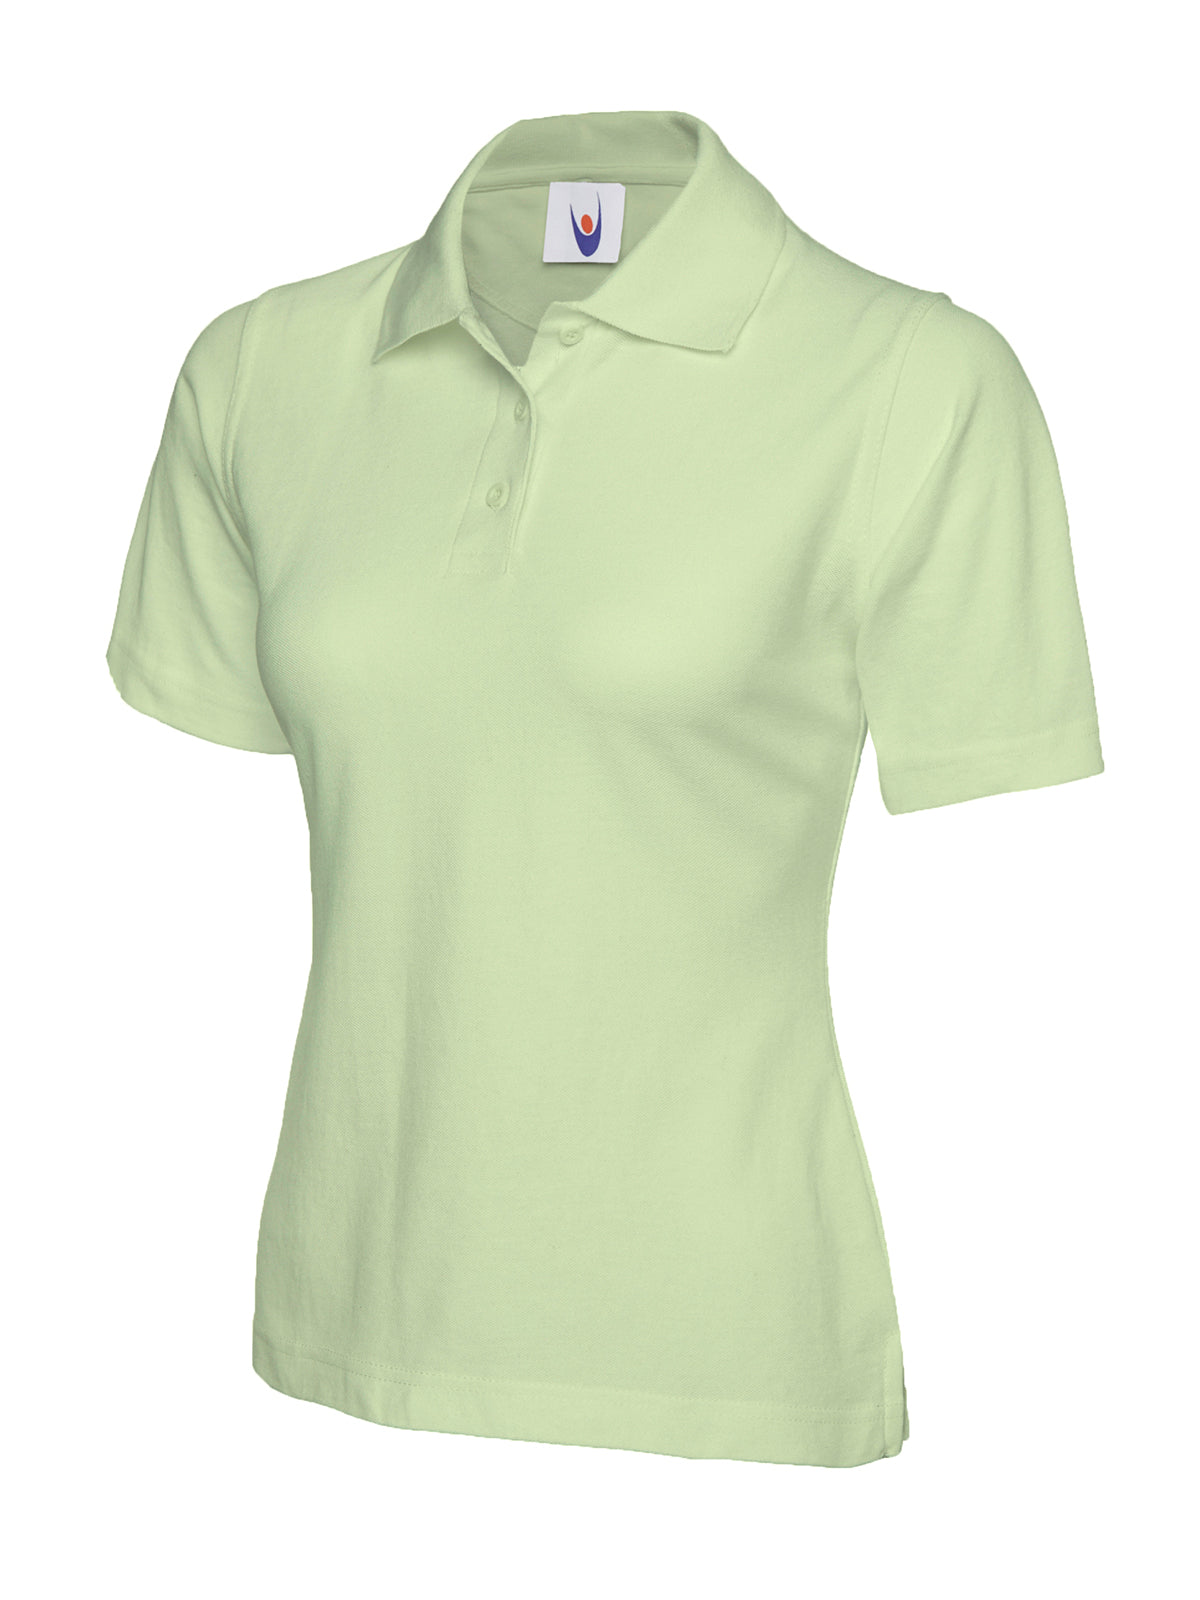 Uneek Ladies Classic Poloshirt UC106 - Lime